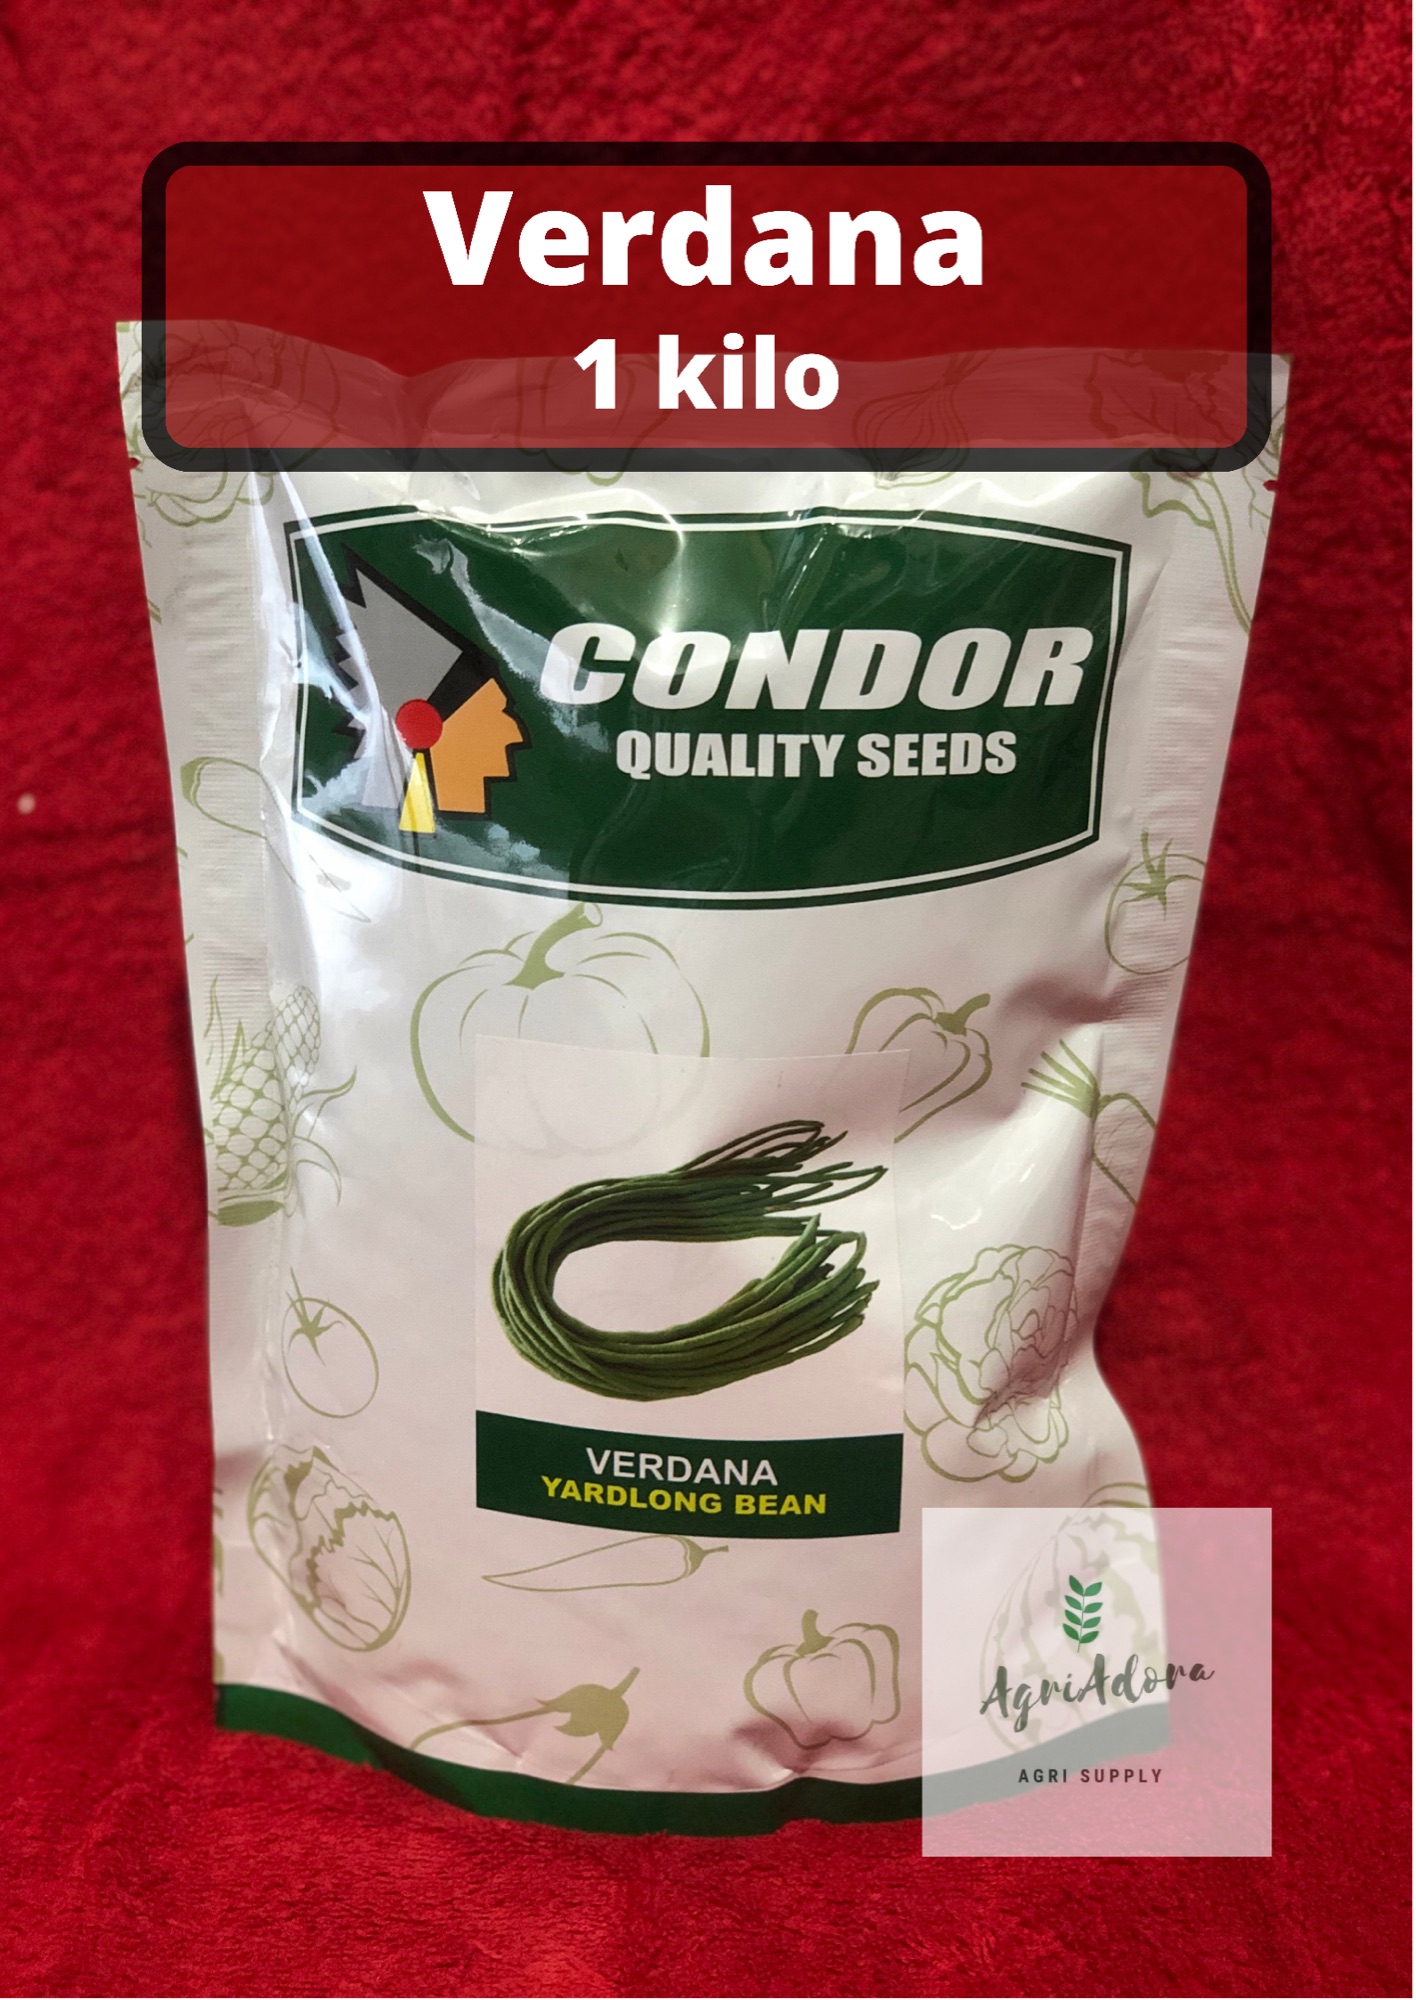 Verdana Yard Long Beans/Sitaw Seeds 1 kilo (Condor) | Lazada PH